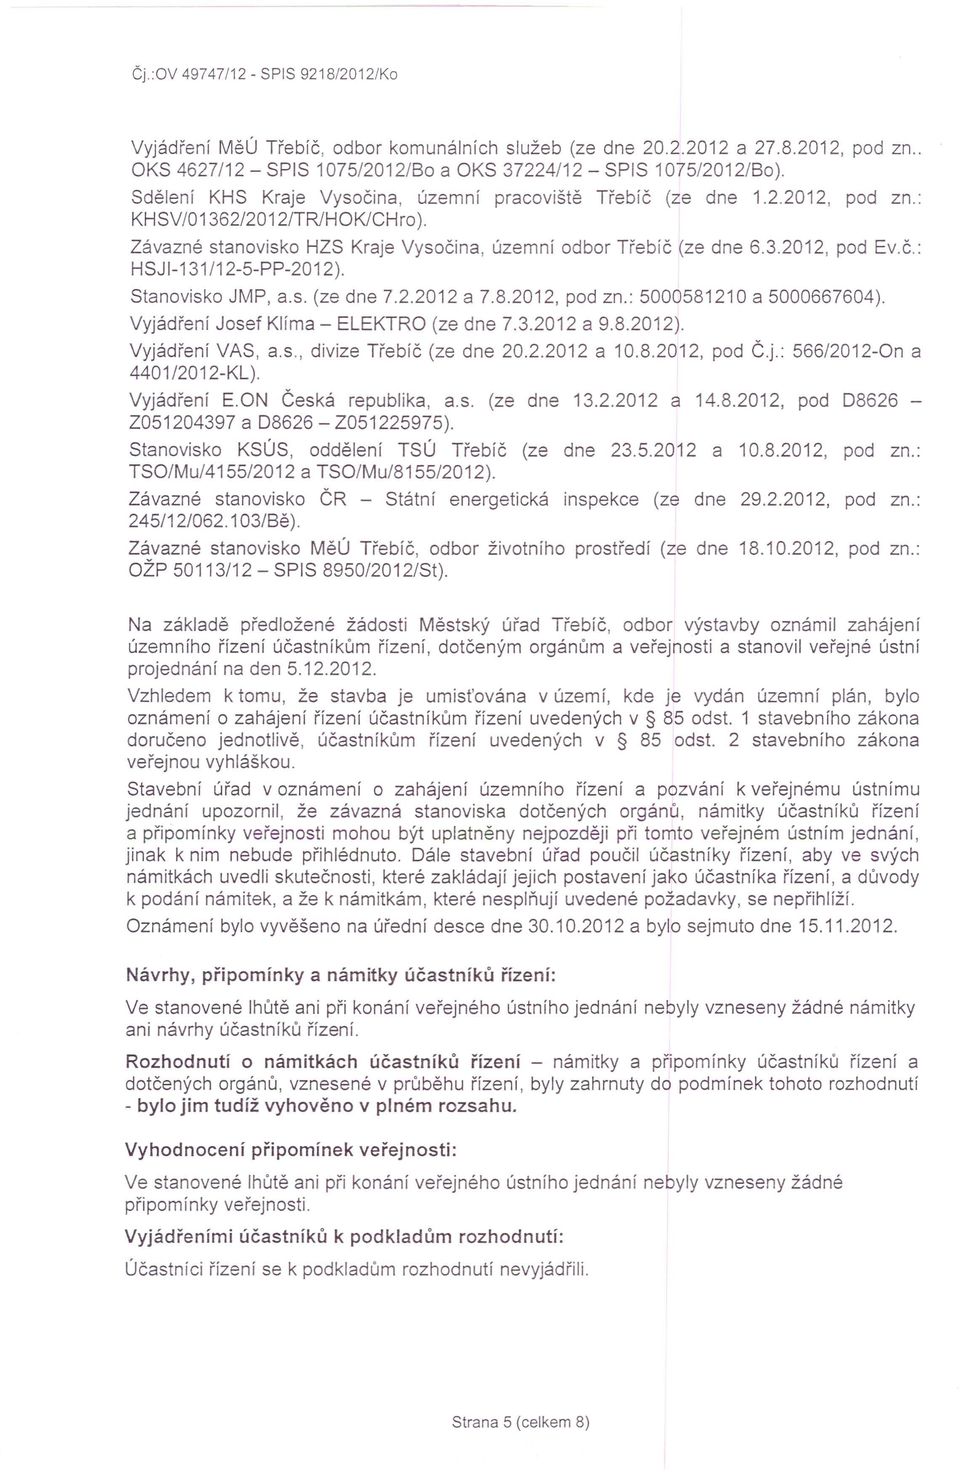 Stanovisko JMP, a.s. (ze dne 7.2.2012 a 7.8.2012, pod zn.: 5000581210 a 5000667604). Vyjádření Josef Klíma - ELEKTRO (ze dne 7.3.2012 a 9.8.2012). Vyjádření VAS, a.s., divize Třebíč (ze dne 20.2.2012 a 10.